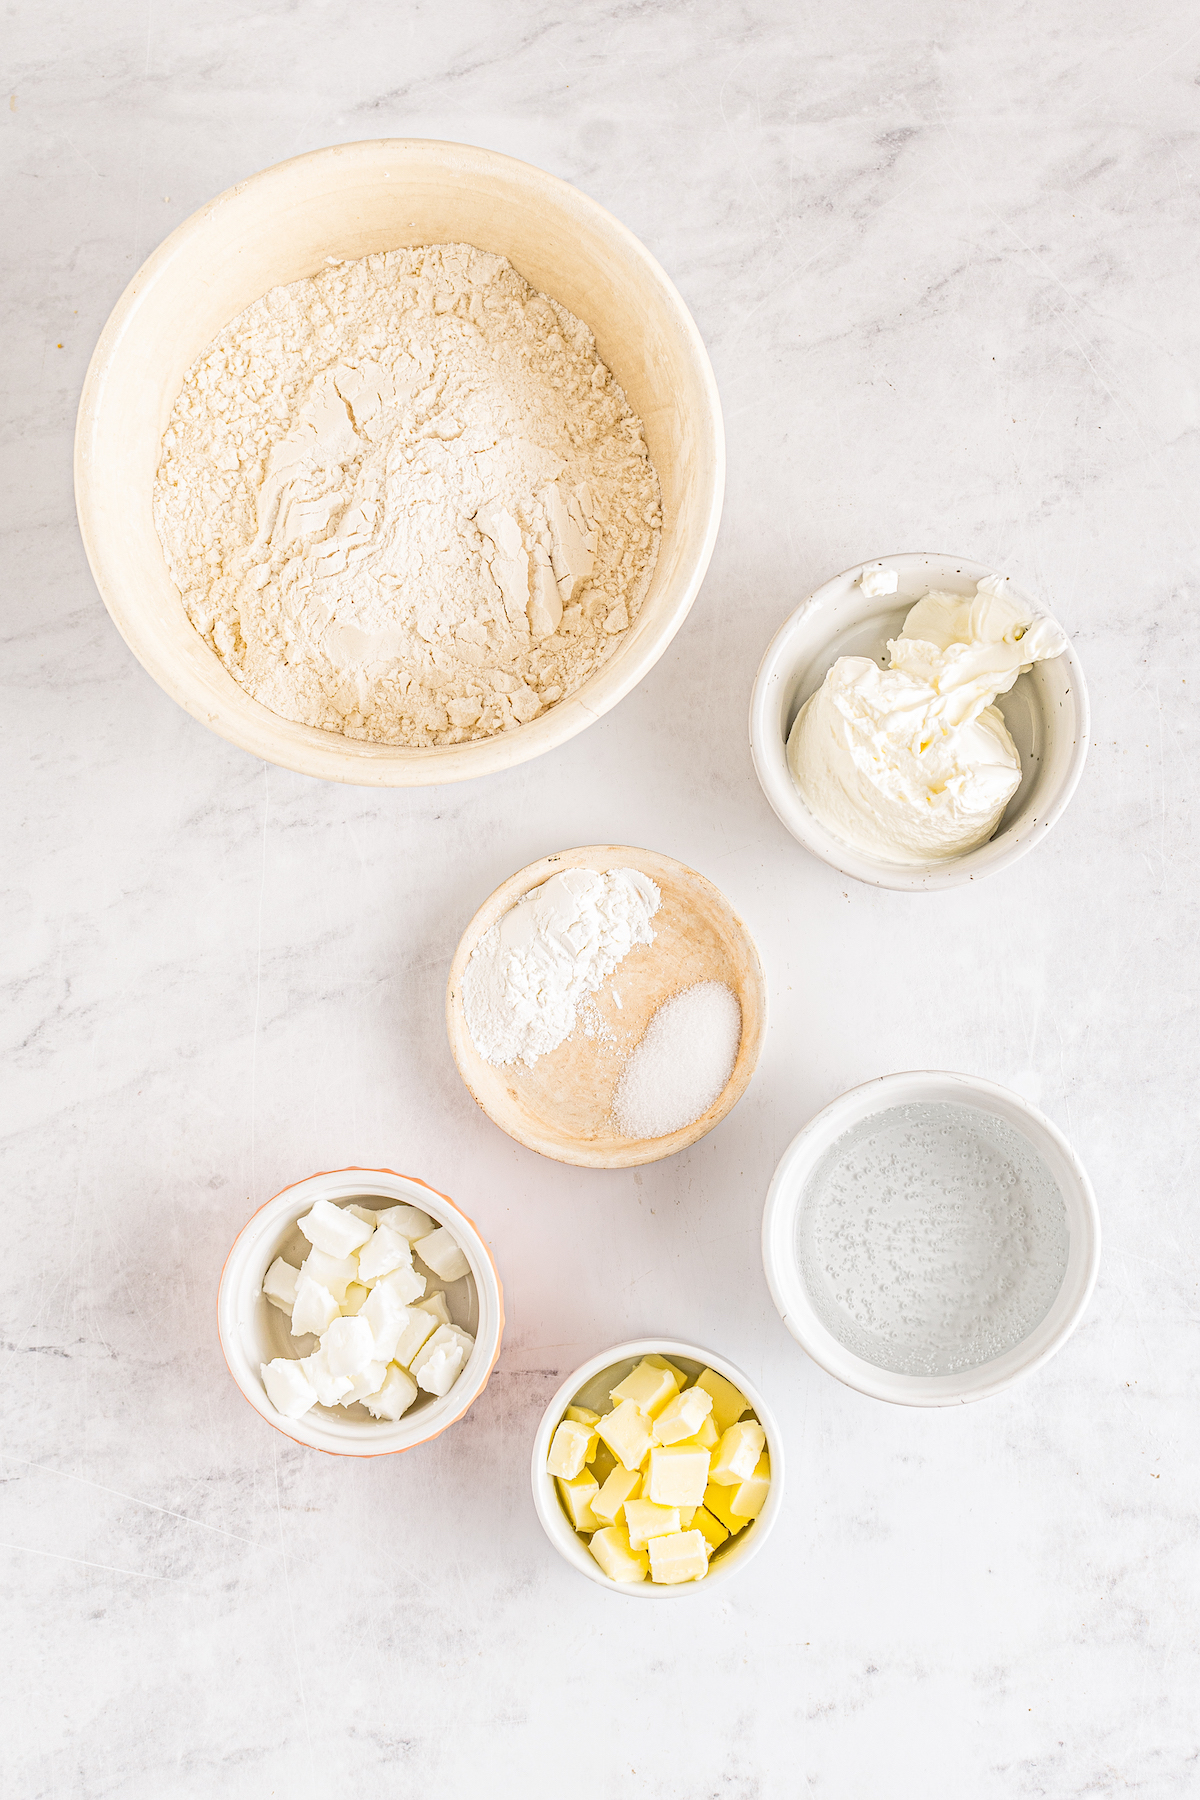 From top: Flour, sour cream, baking powder, salt, cubed shortening, cubed butter, 7-Up.